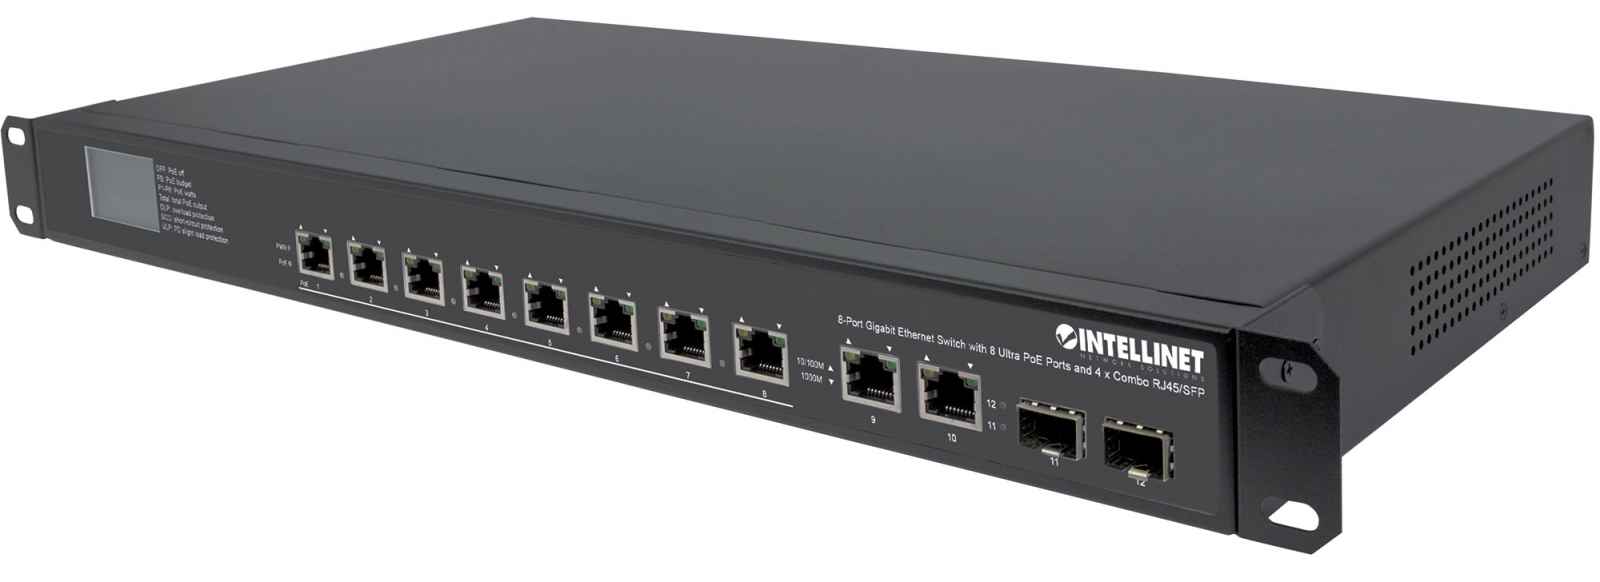 Switch Web-Smart de 8 puertos FE PoE+ con 1 puerto GbE Combo (561358)